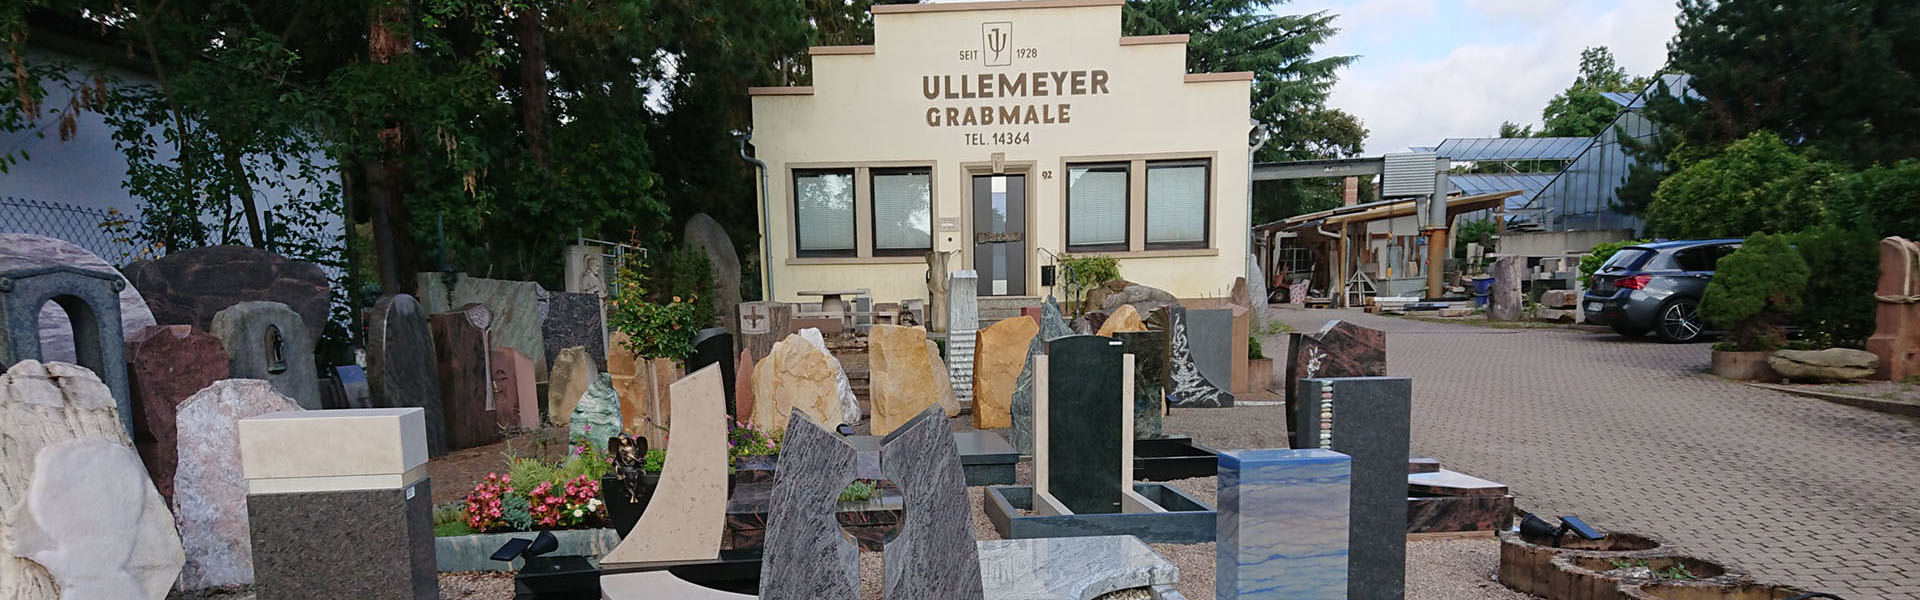 Grabmale Ullemeyer